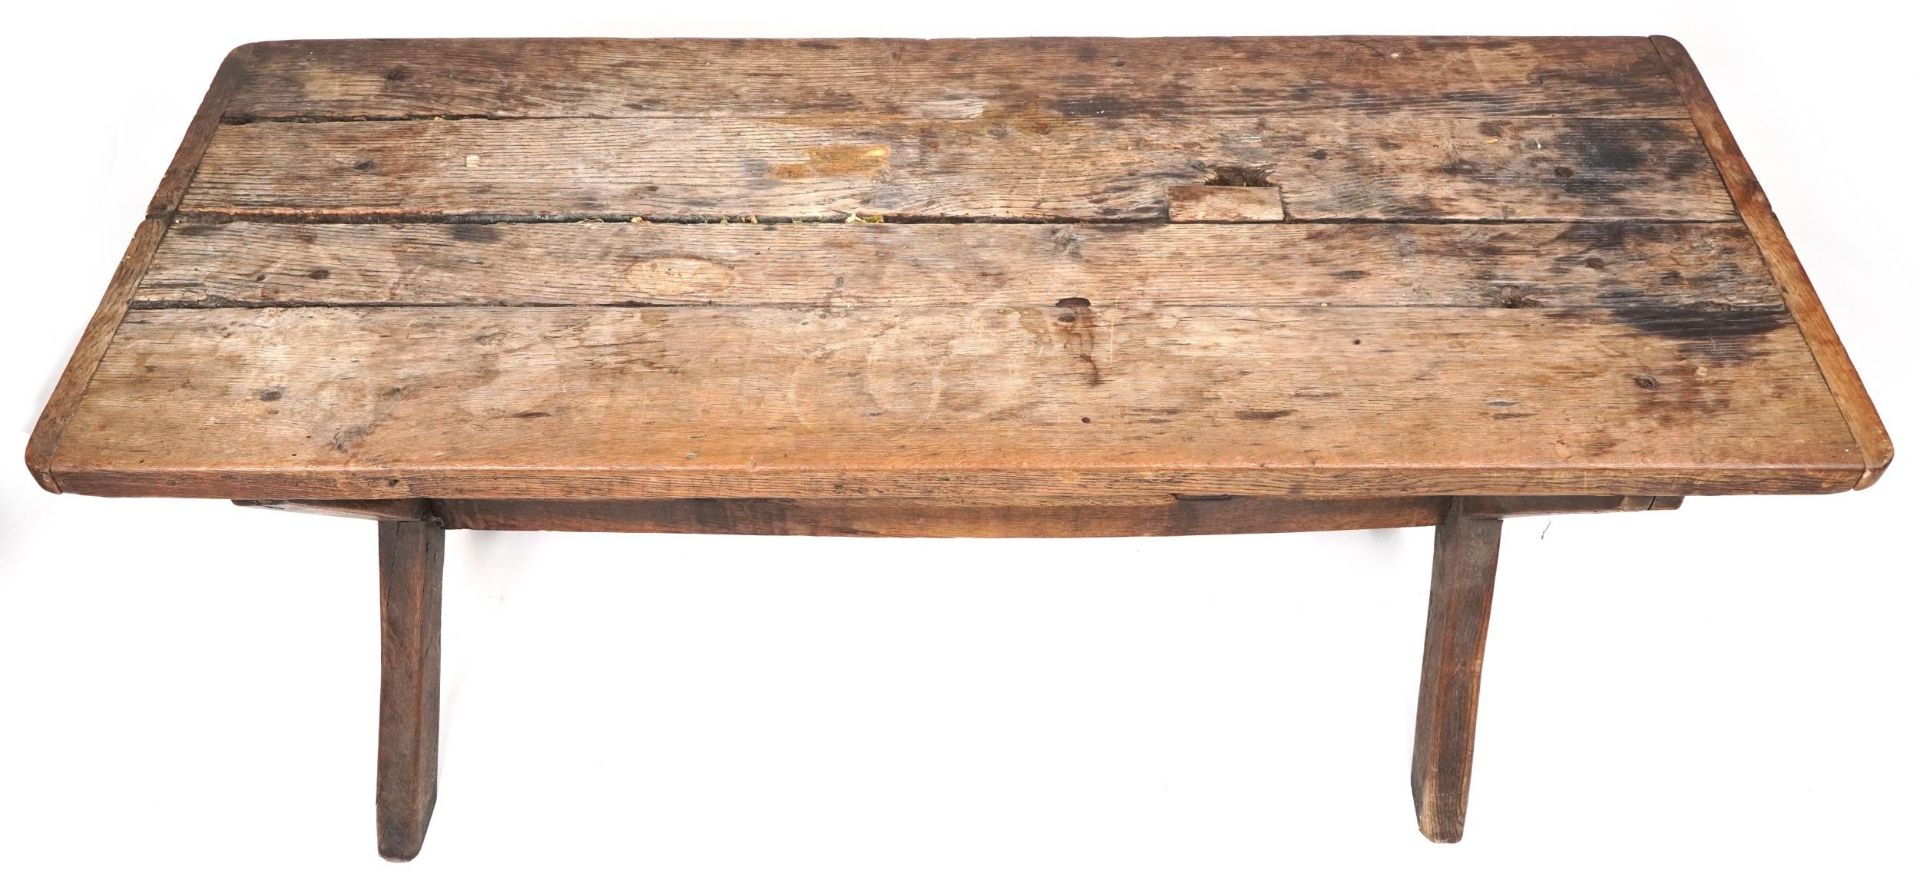 Industrial hardwood dining table with X stretcher, 71cm H x 157cm W x 60cm D - Bild 3 aus 4